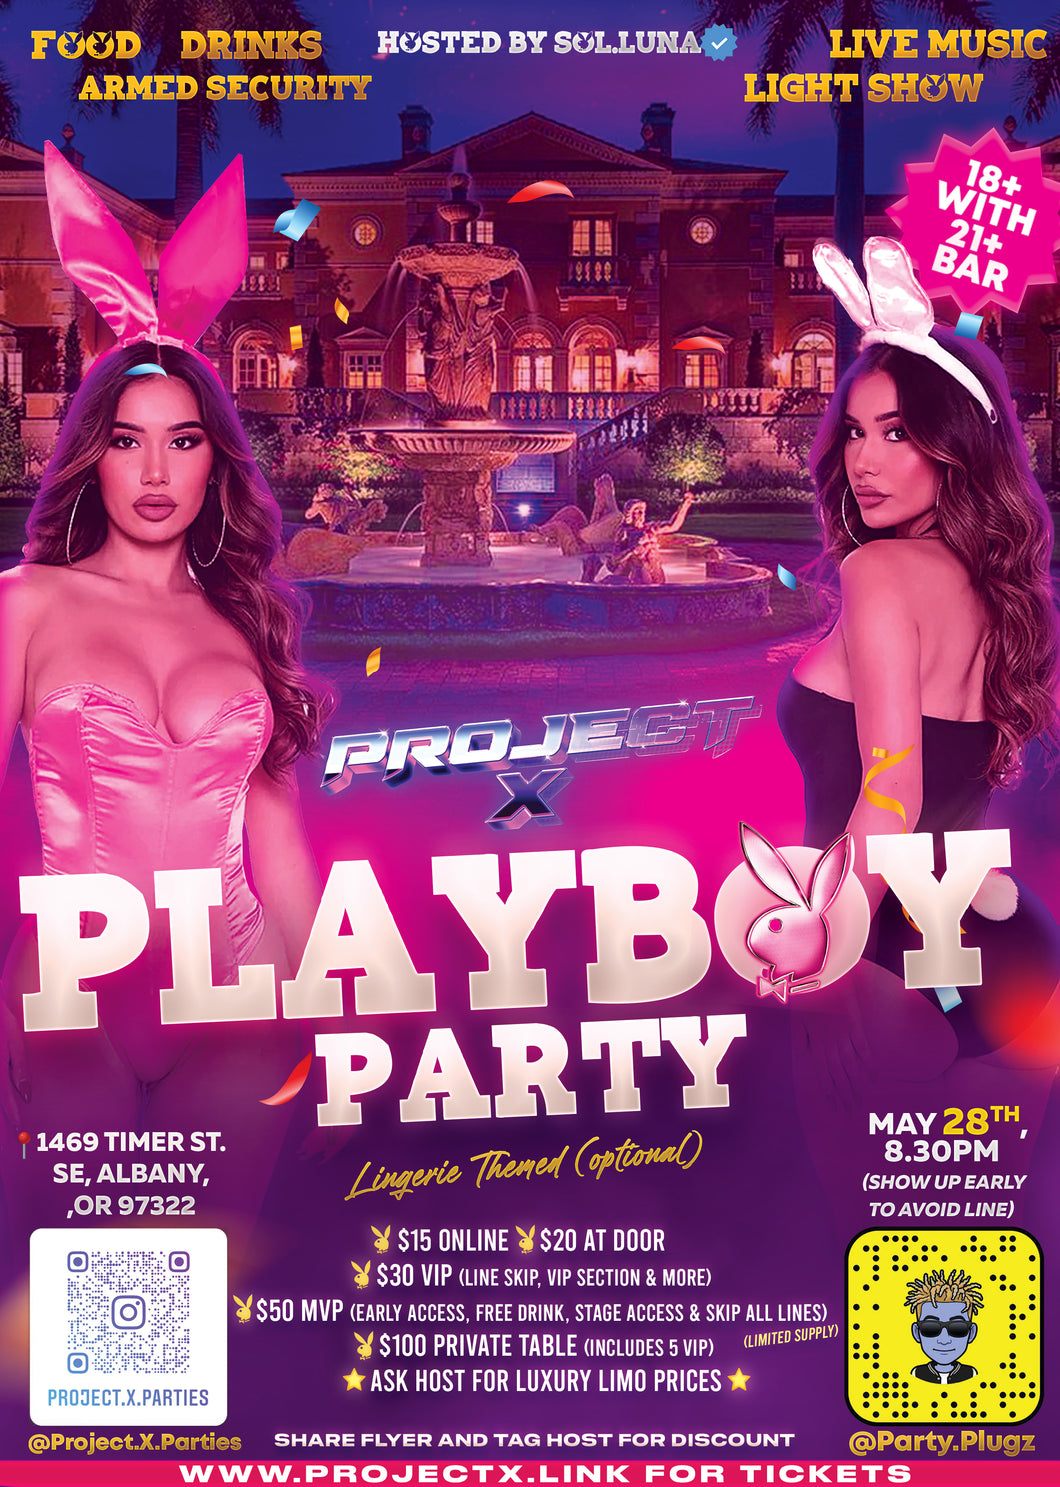 Playboy Party VIP